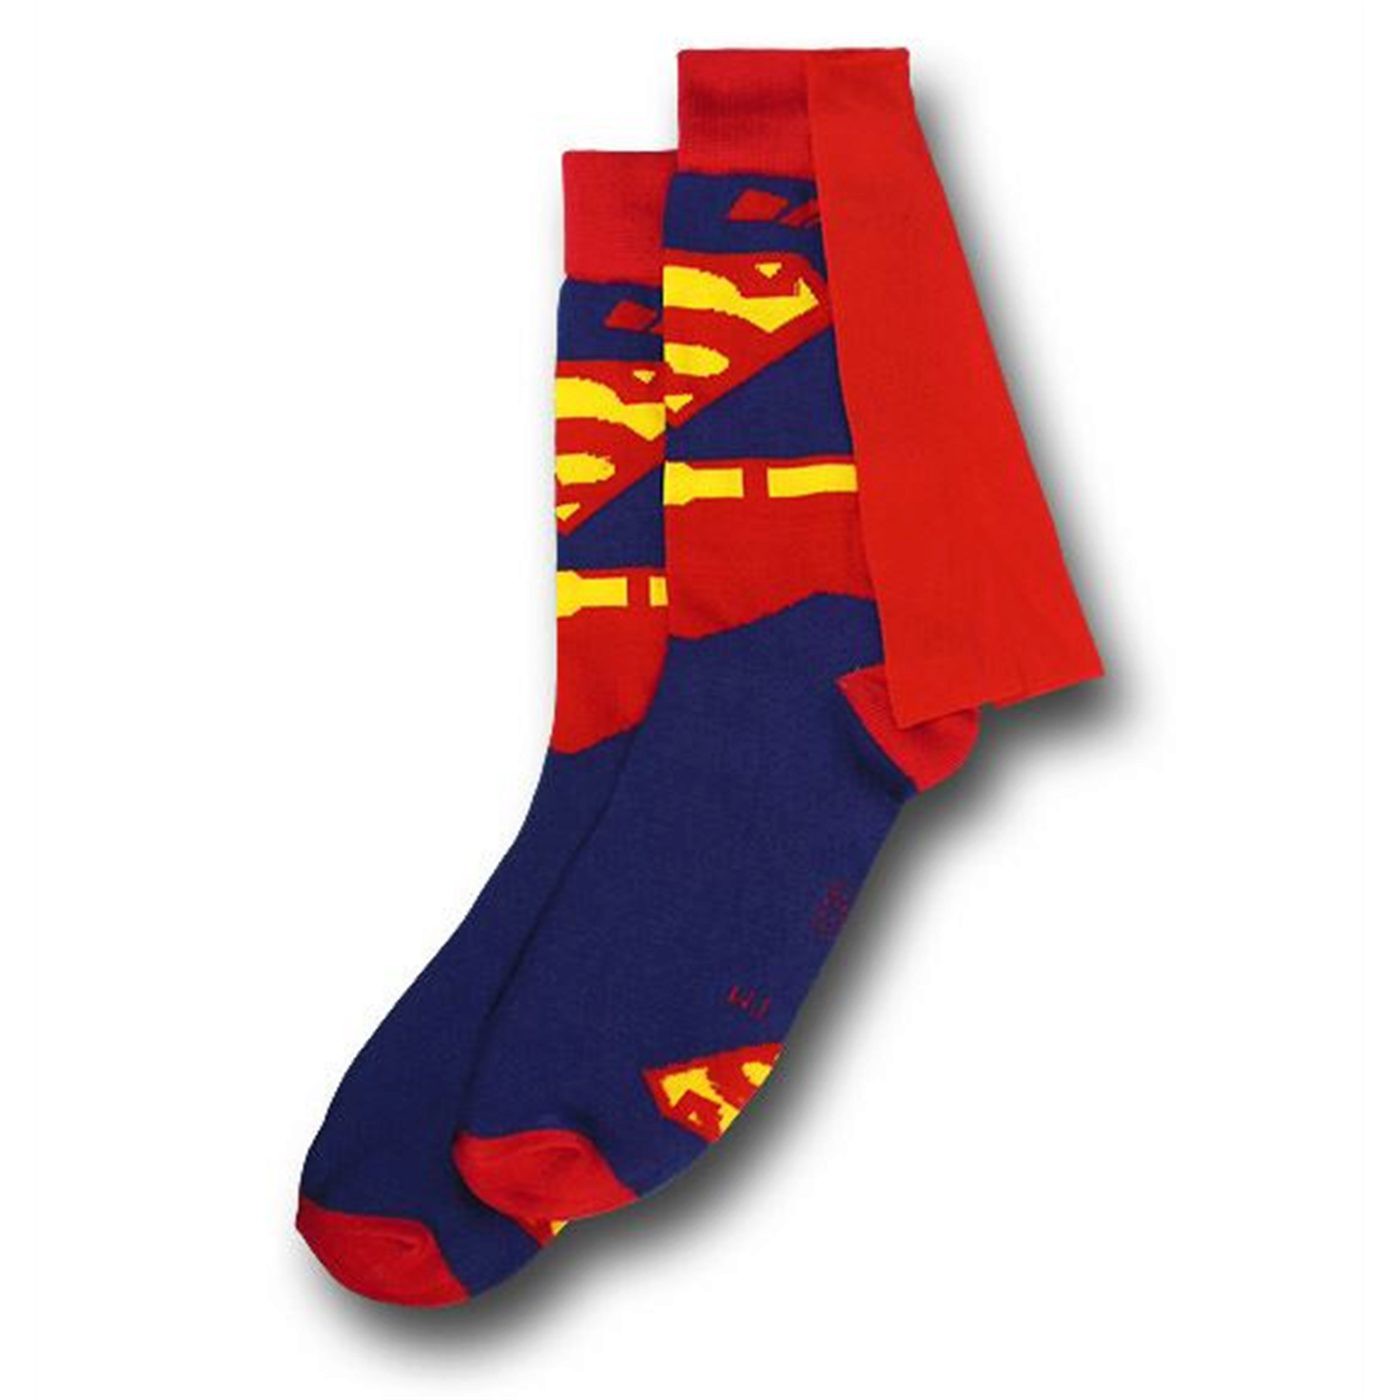 Superman Crew Socks With Cape